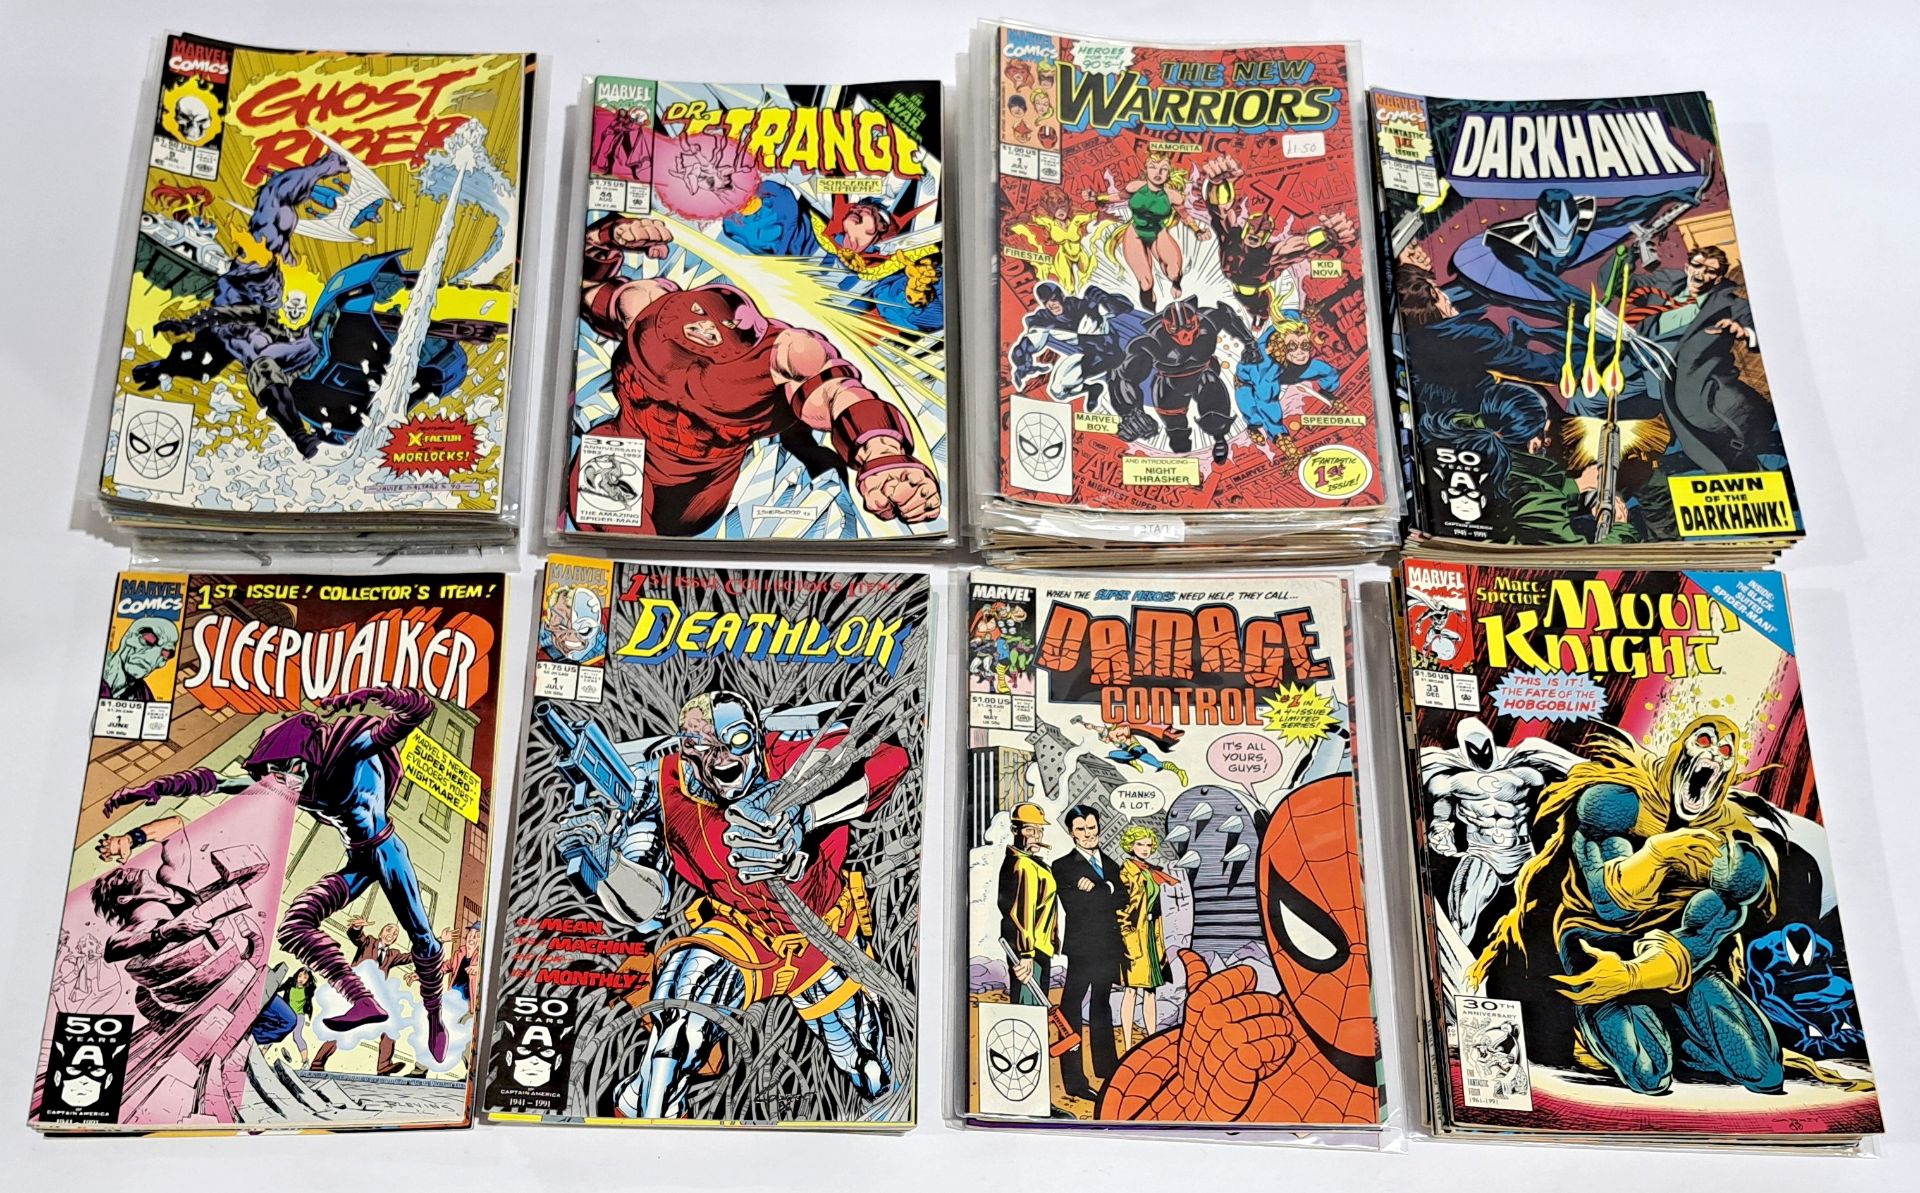 Quantity of Marvel Superhero Comics